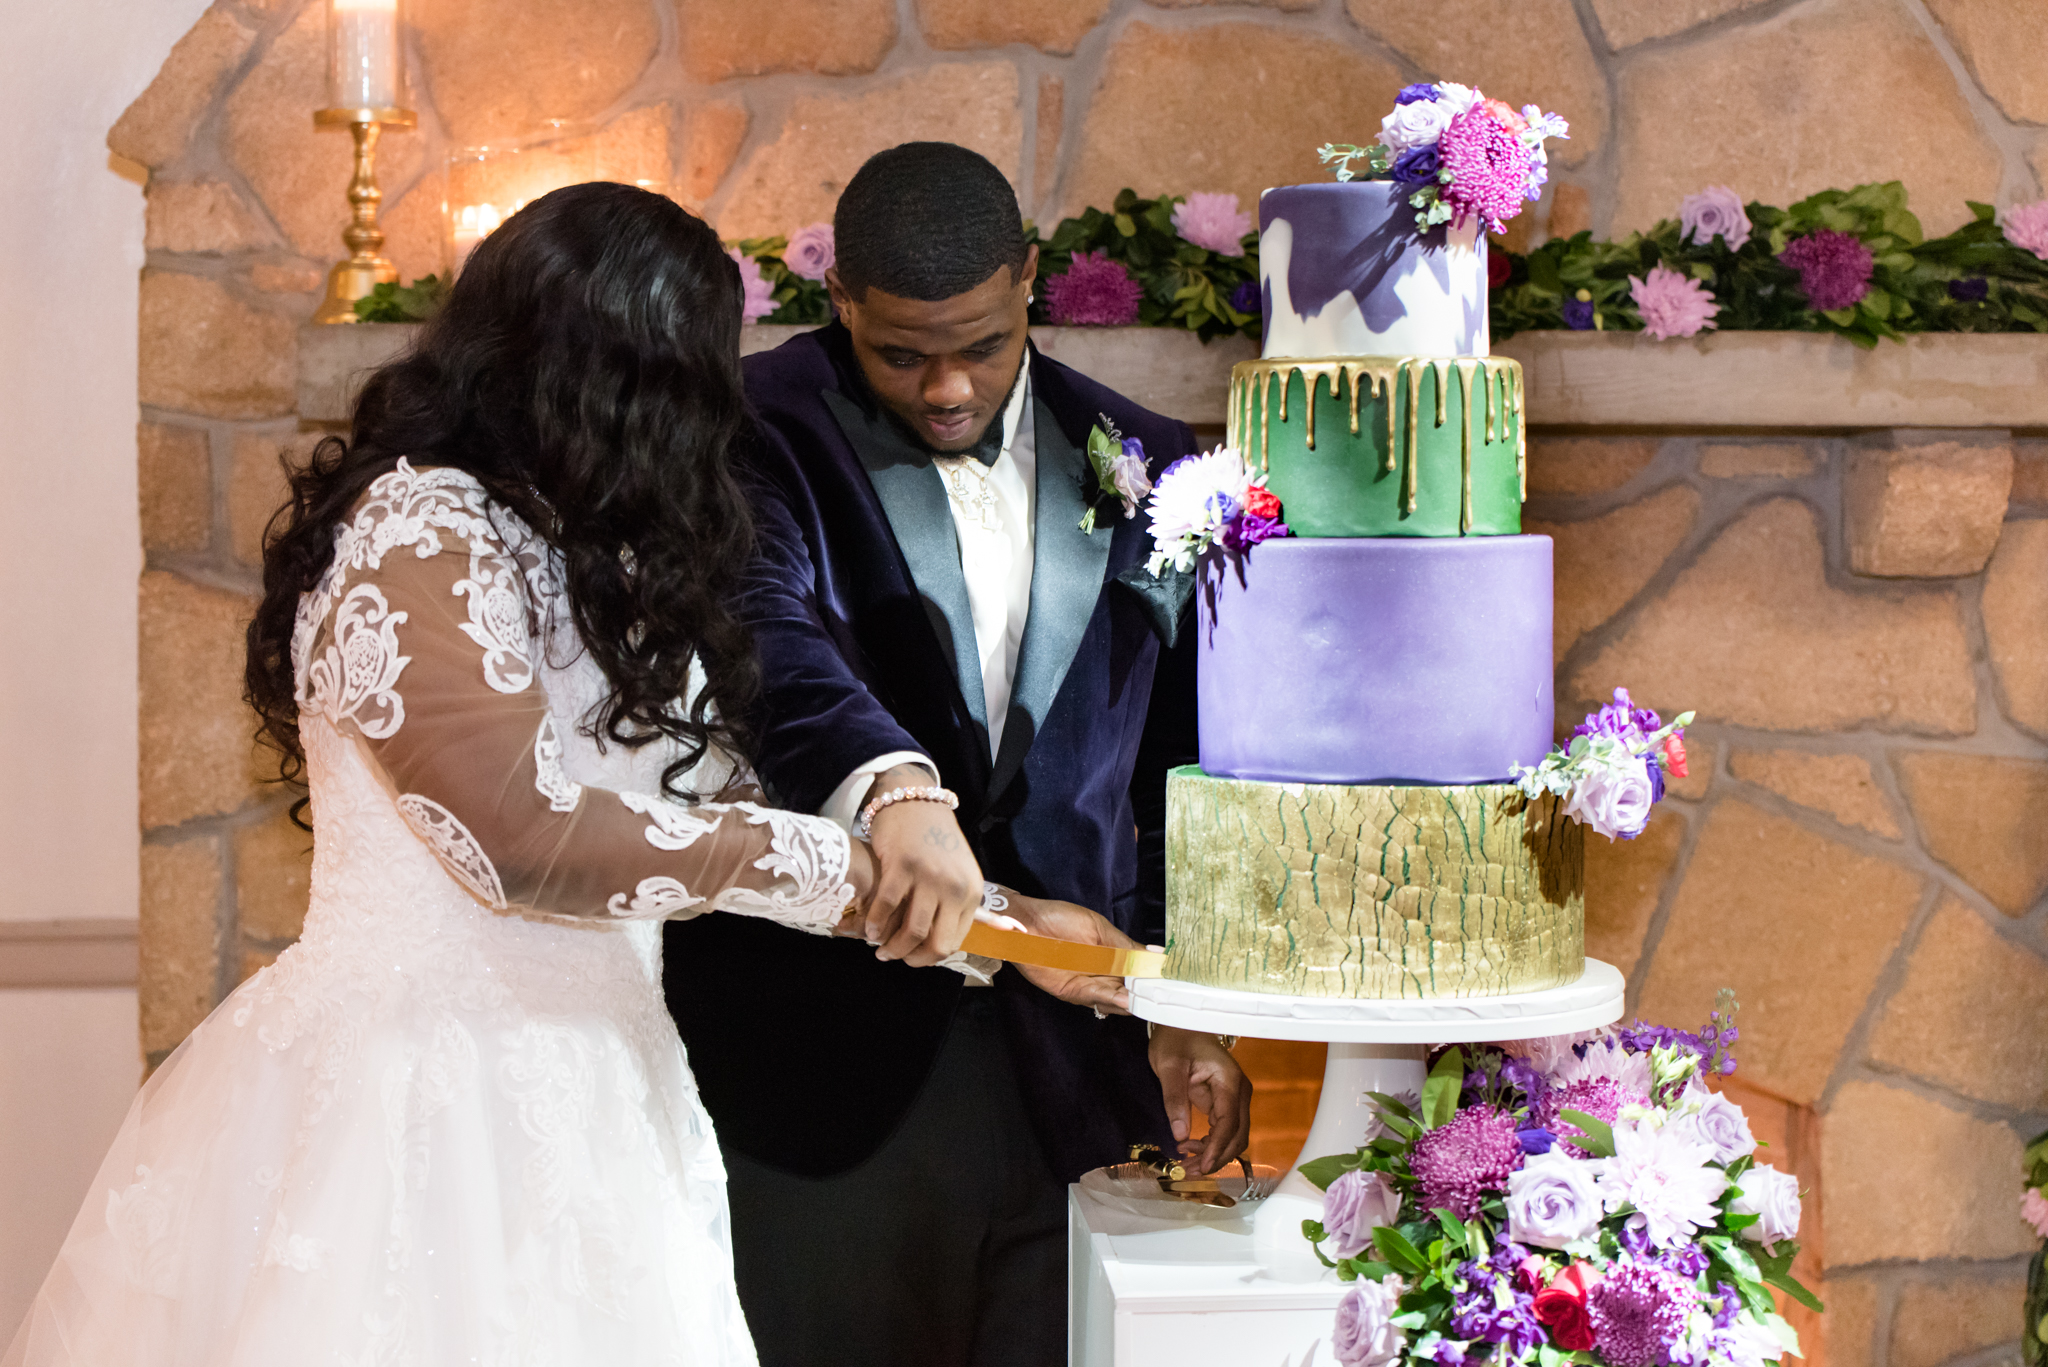 Bride and groom cut wedding cake.